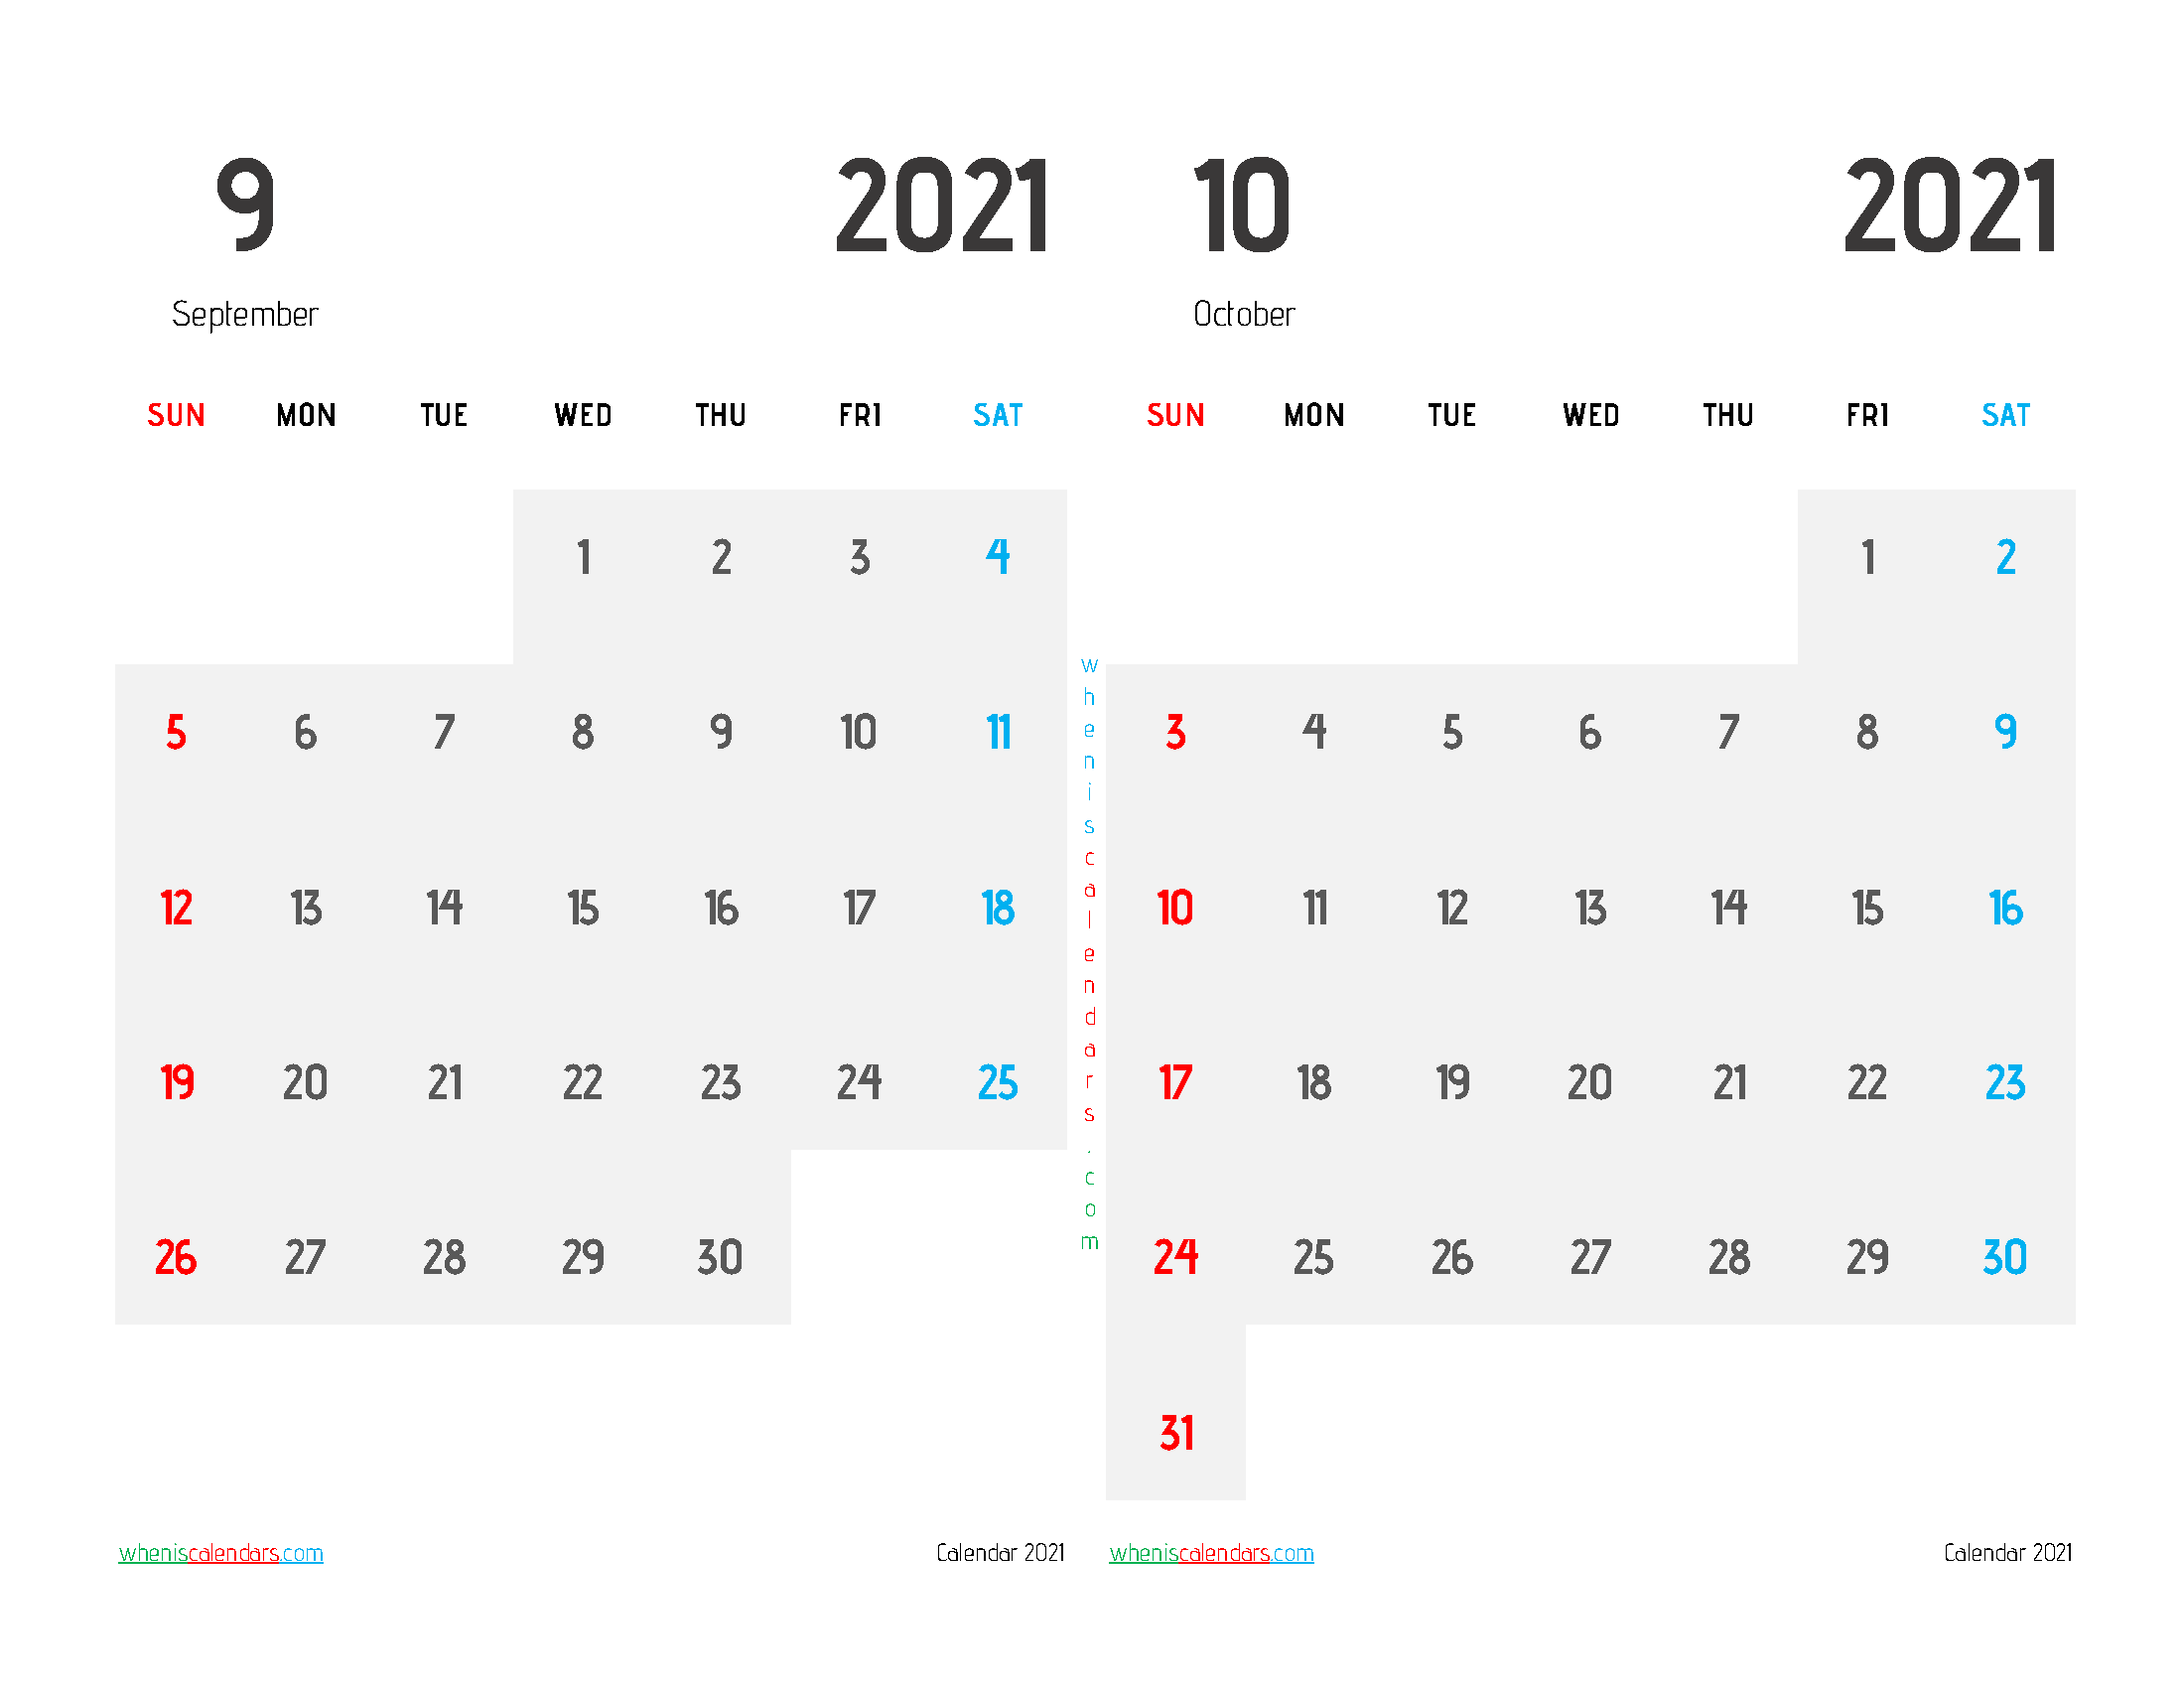 Calendar for September and October 2021